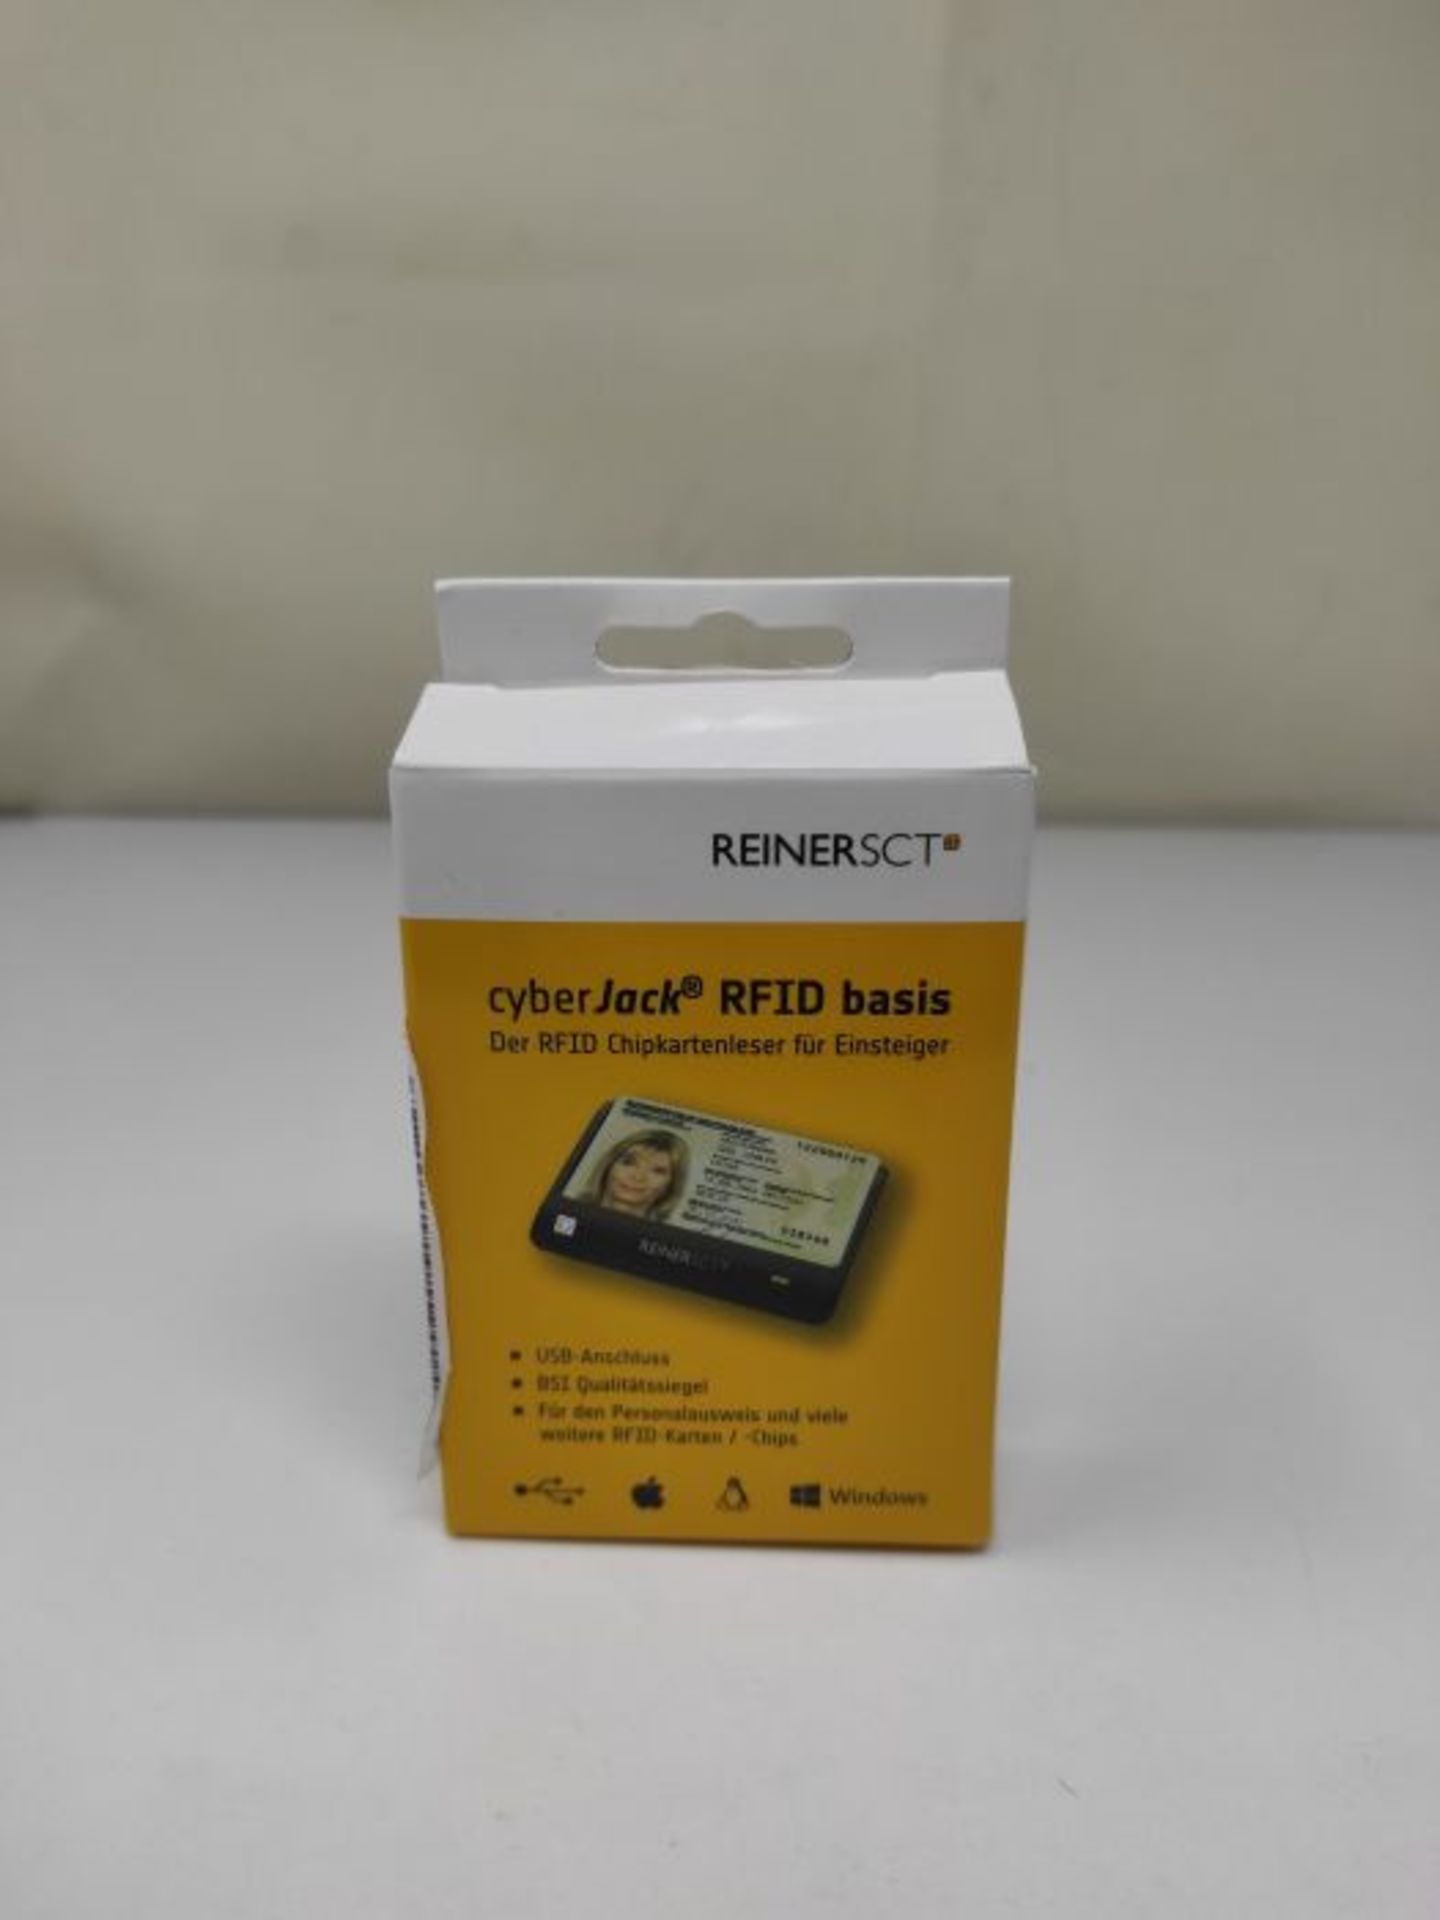 ReinerSCT cyberJack RFID basis - RFID-Leser - USB Black 2718500-100 - Image 2 of 3